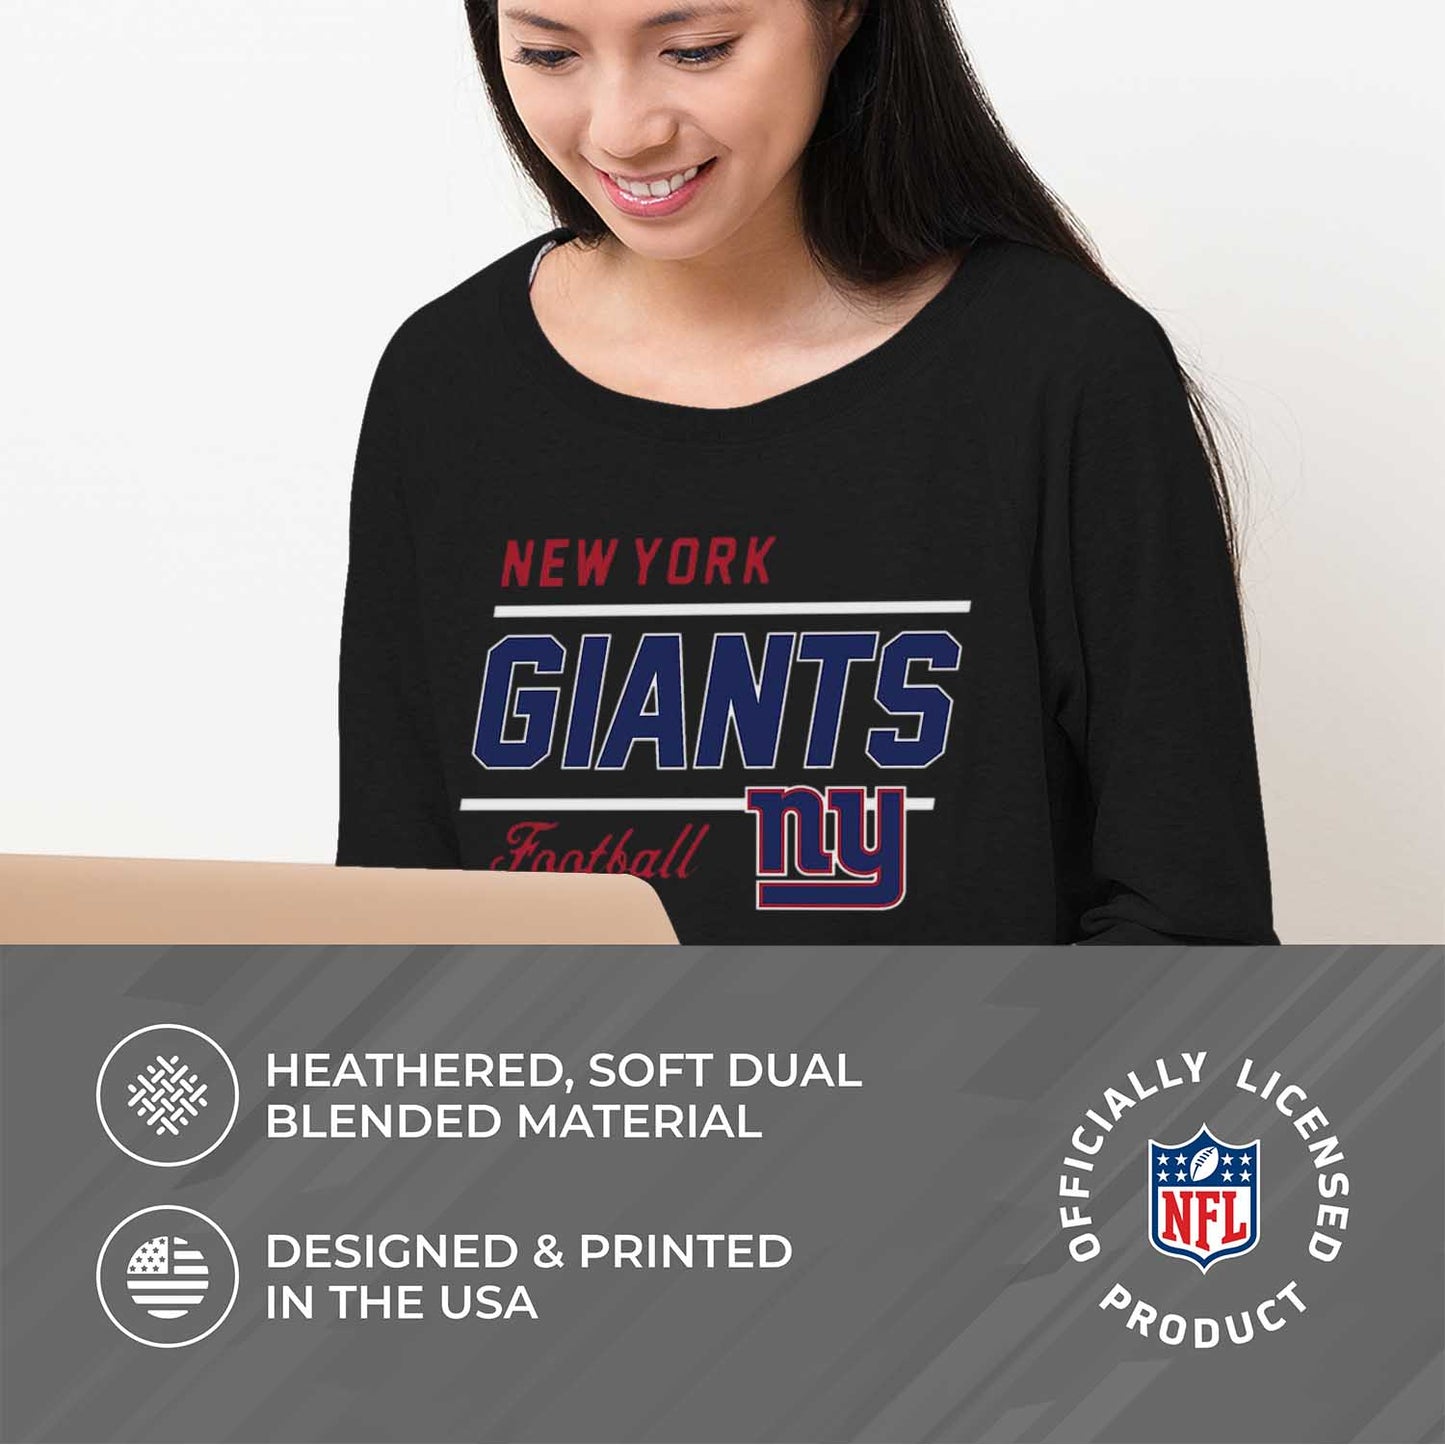 New York Giants NFL Womens Crew Neck Light Weight - Black